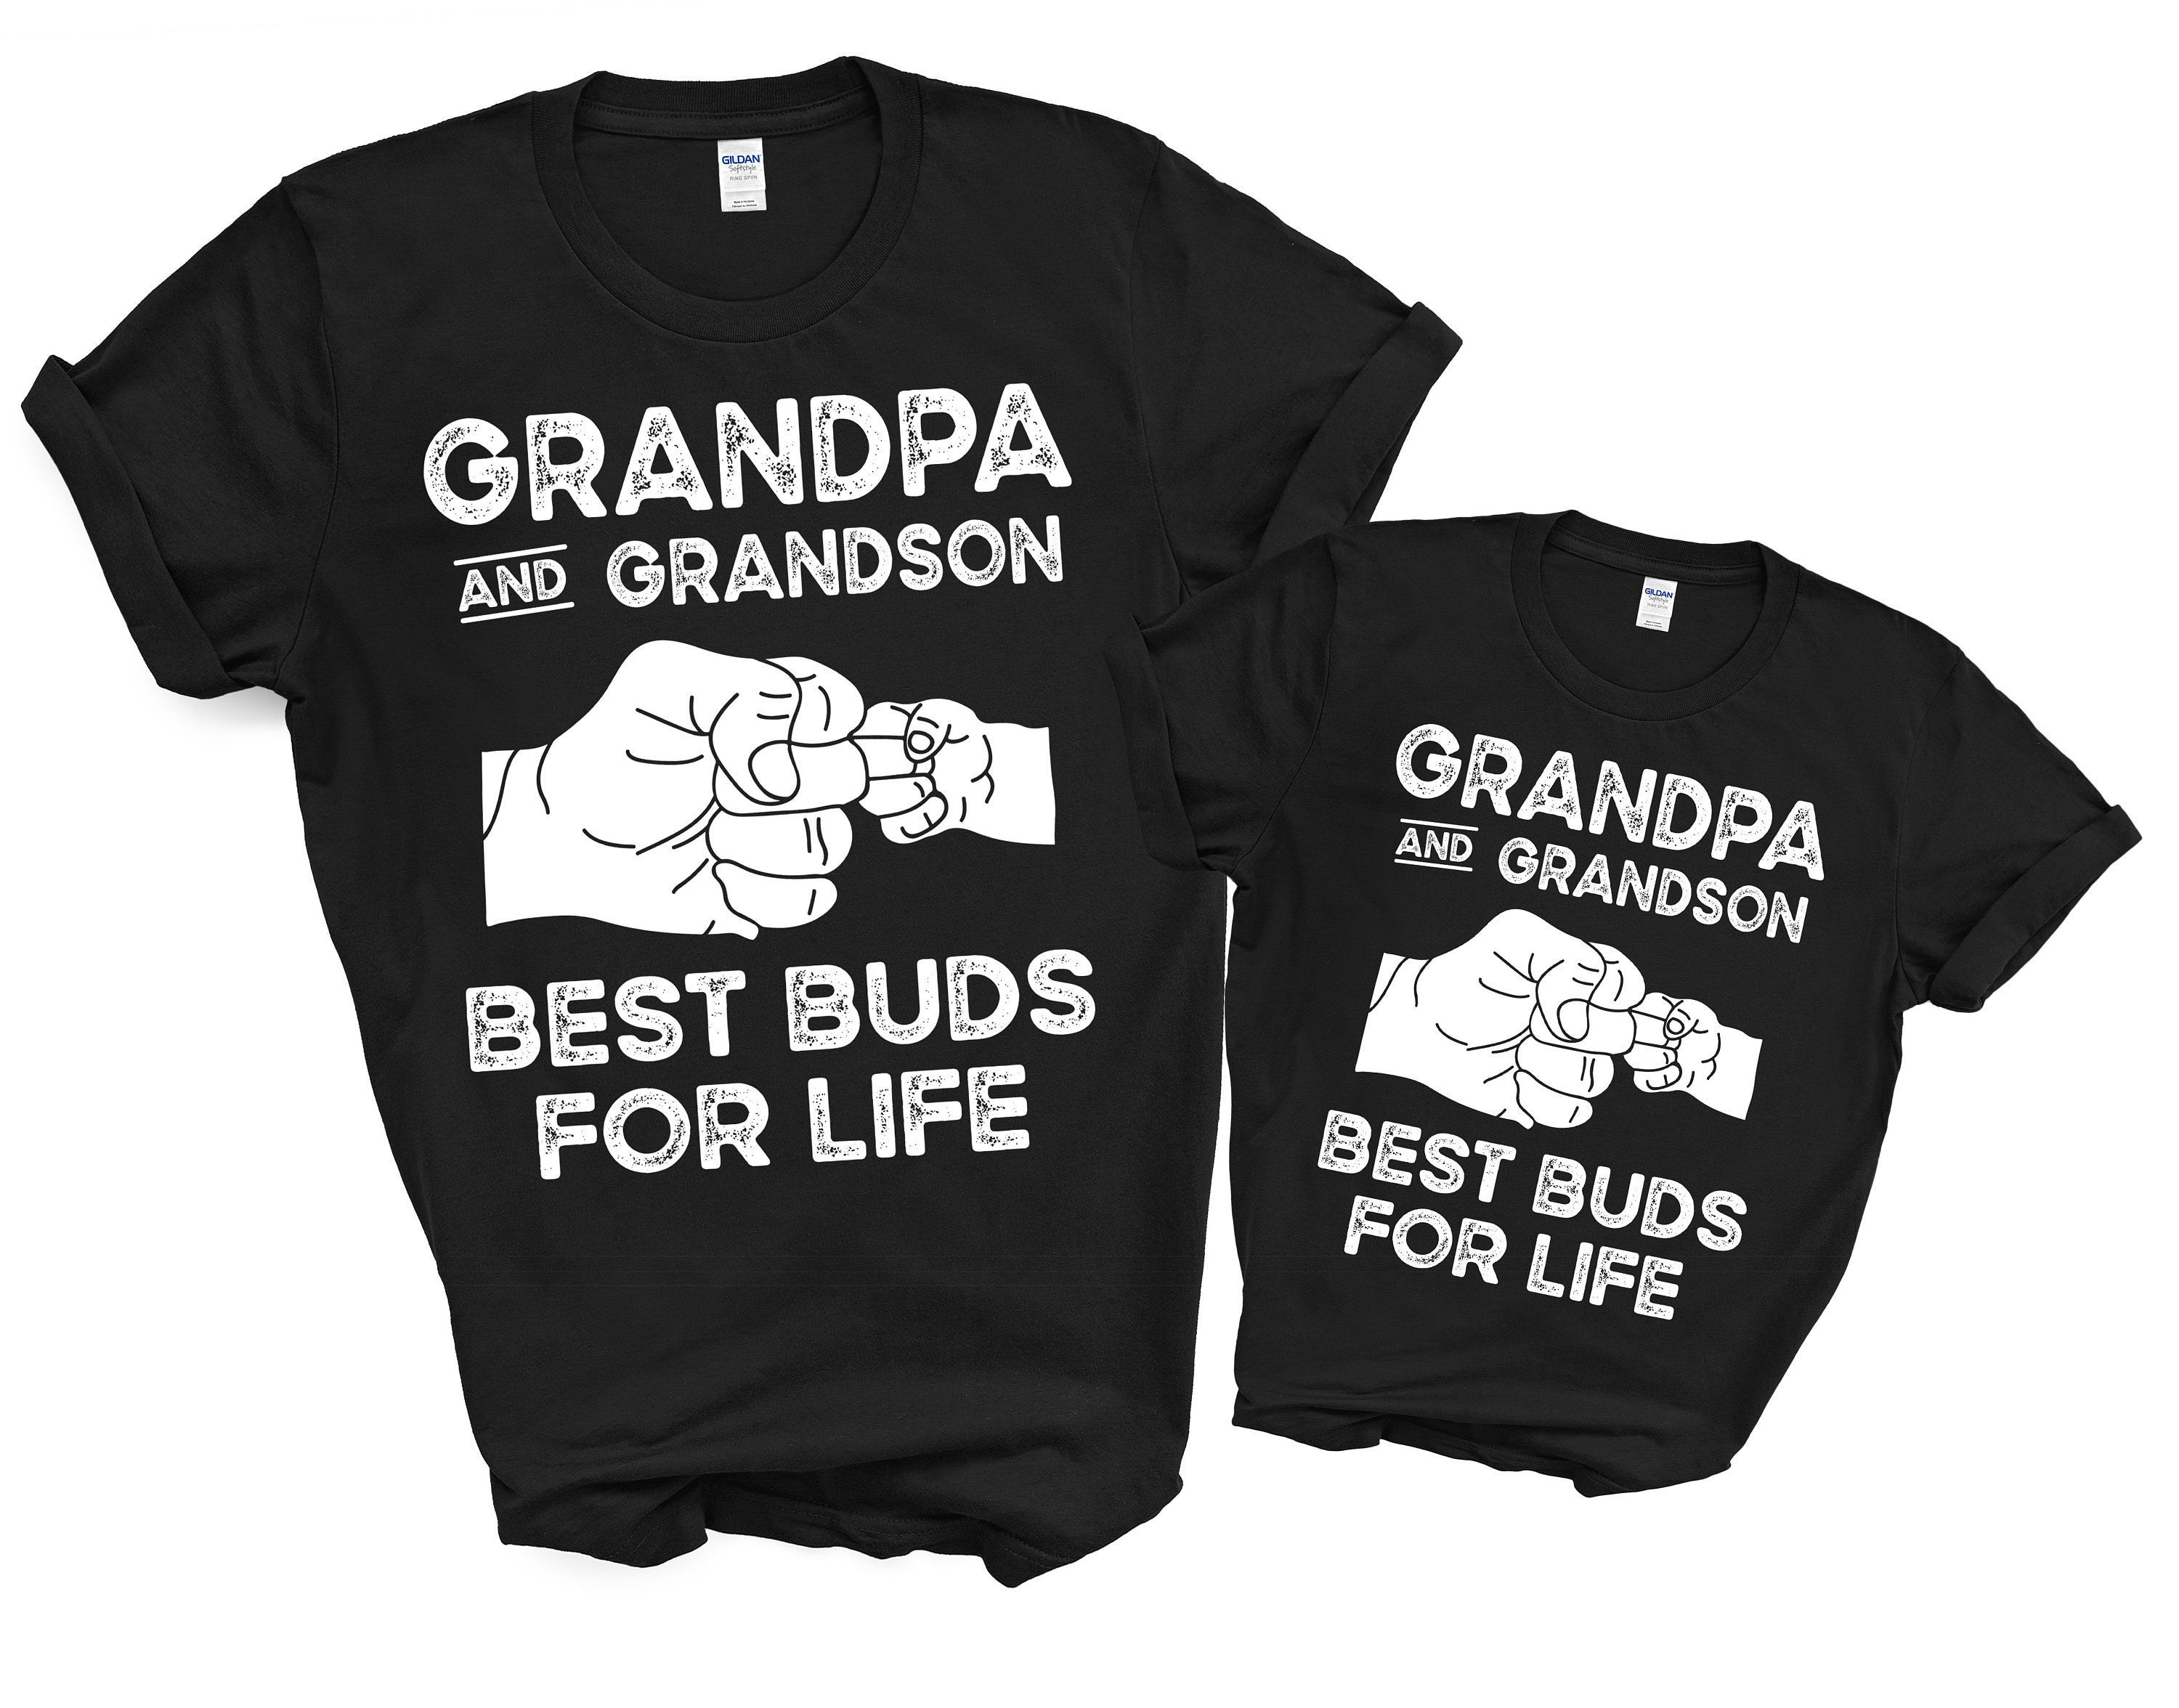 Grandpa and Grandson Best Buds for Life Shirt Best Buds Shirts for Men Boys Grandpa  Grandson Matching Shirts Grandpa Christmas Gift 